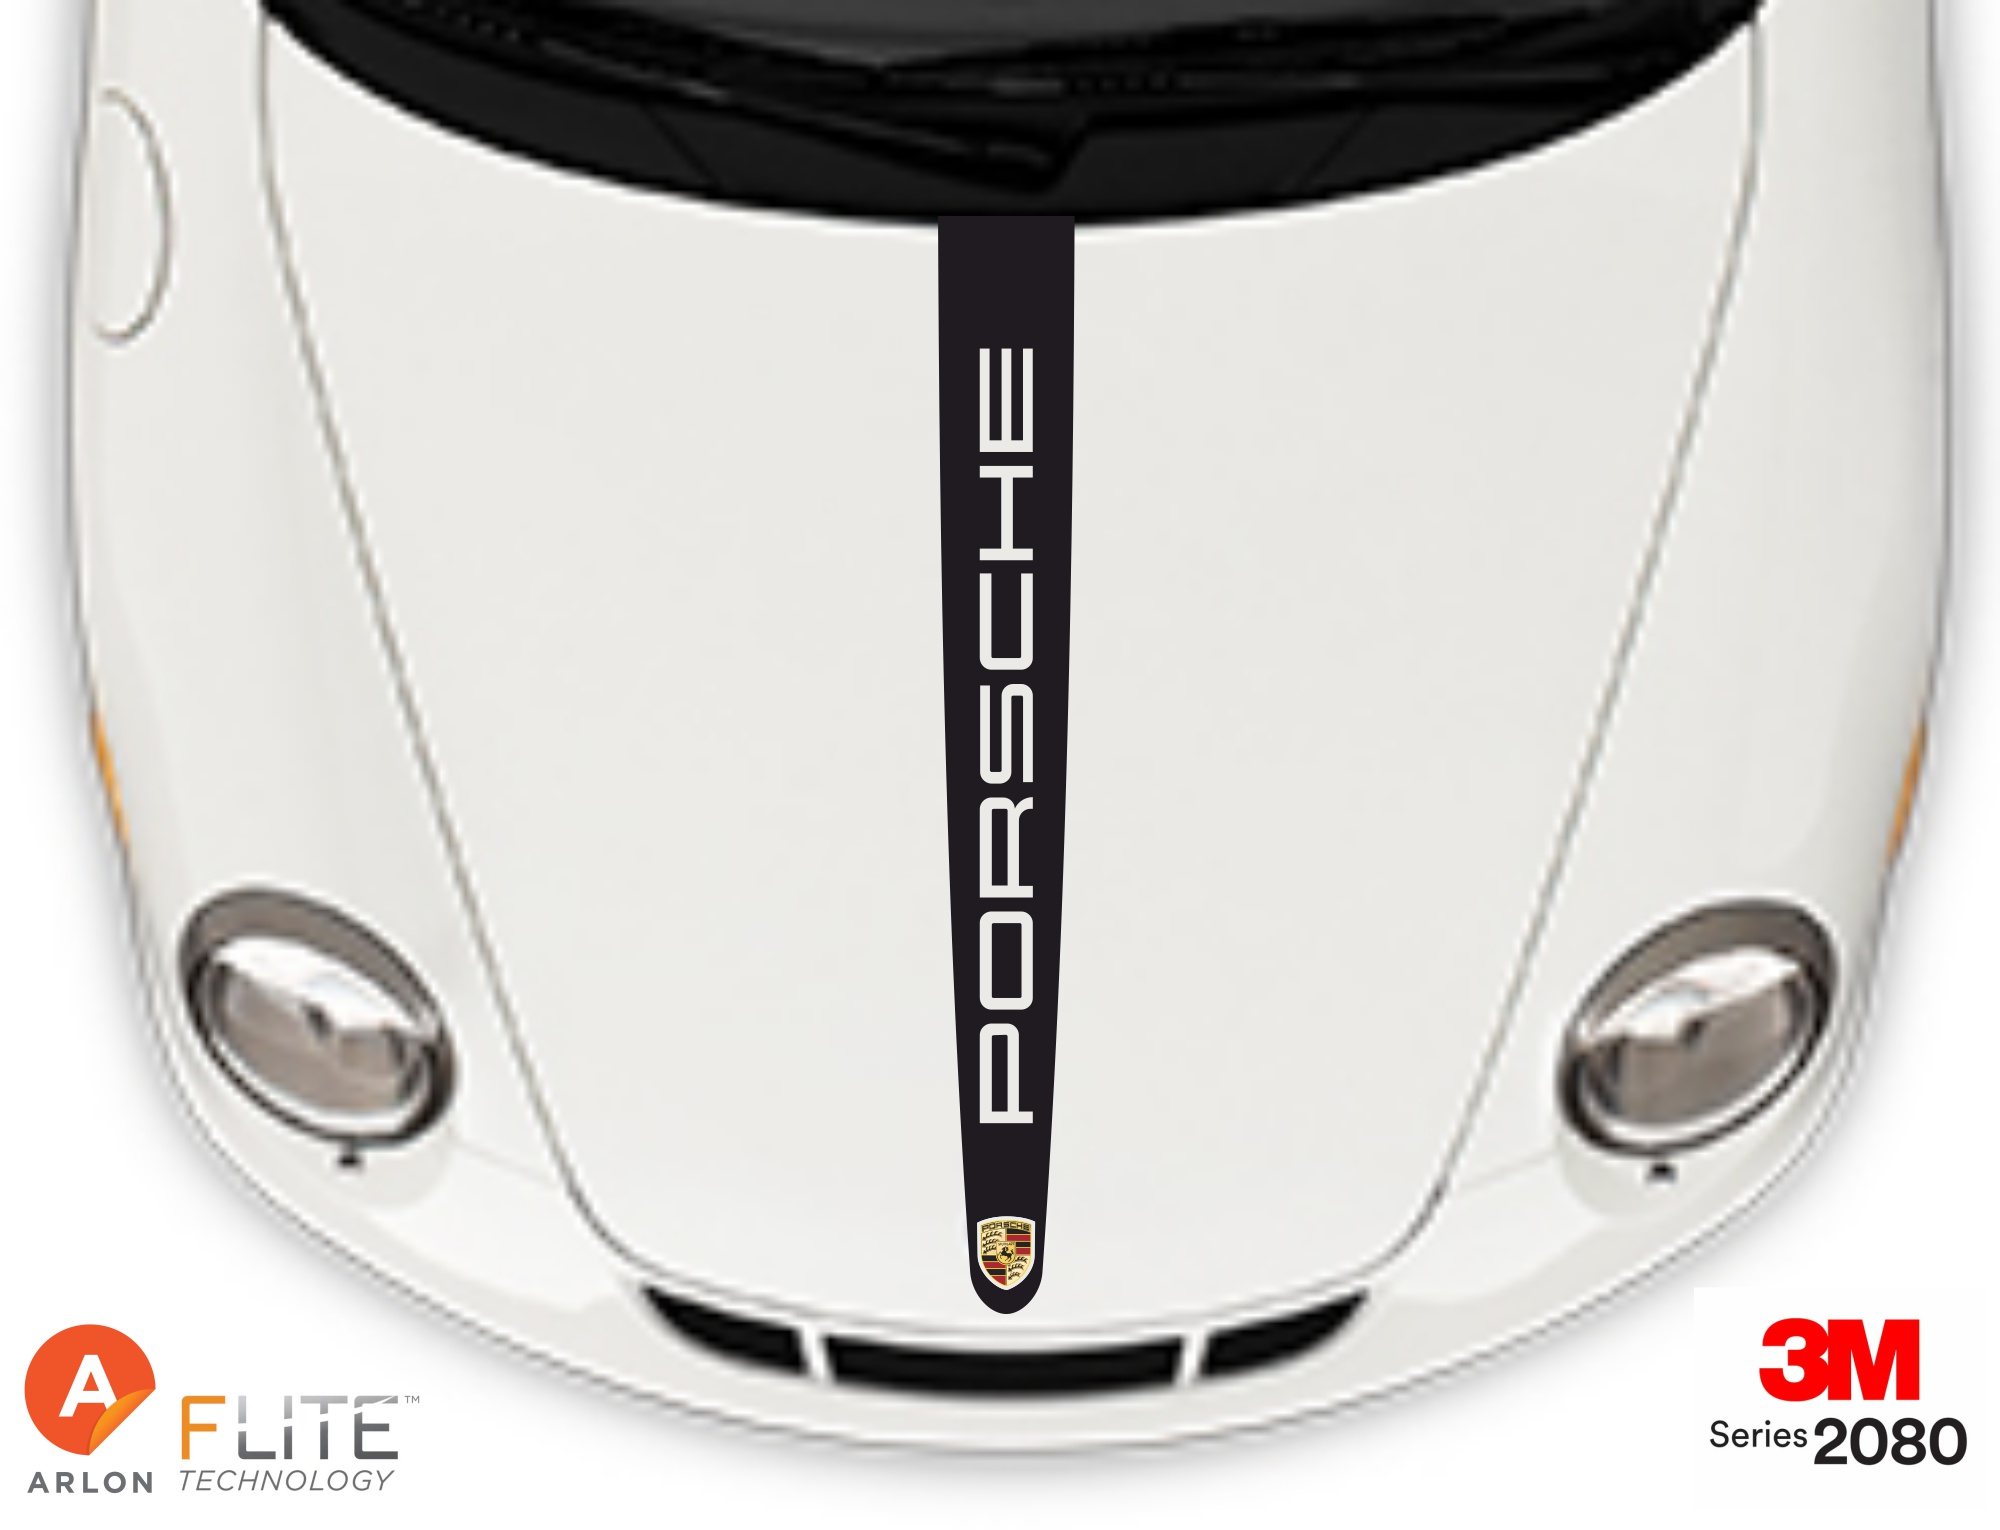 Porsche 911 naklejki decals stripes sticker aufkleber nalepky samolepky tuning